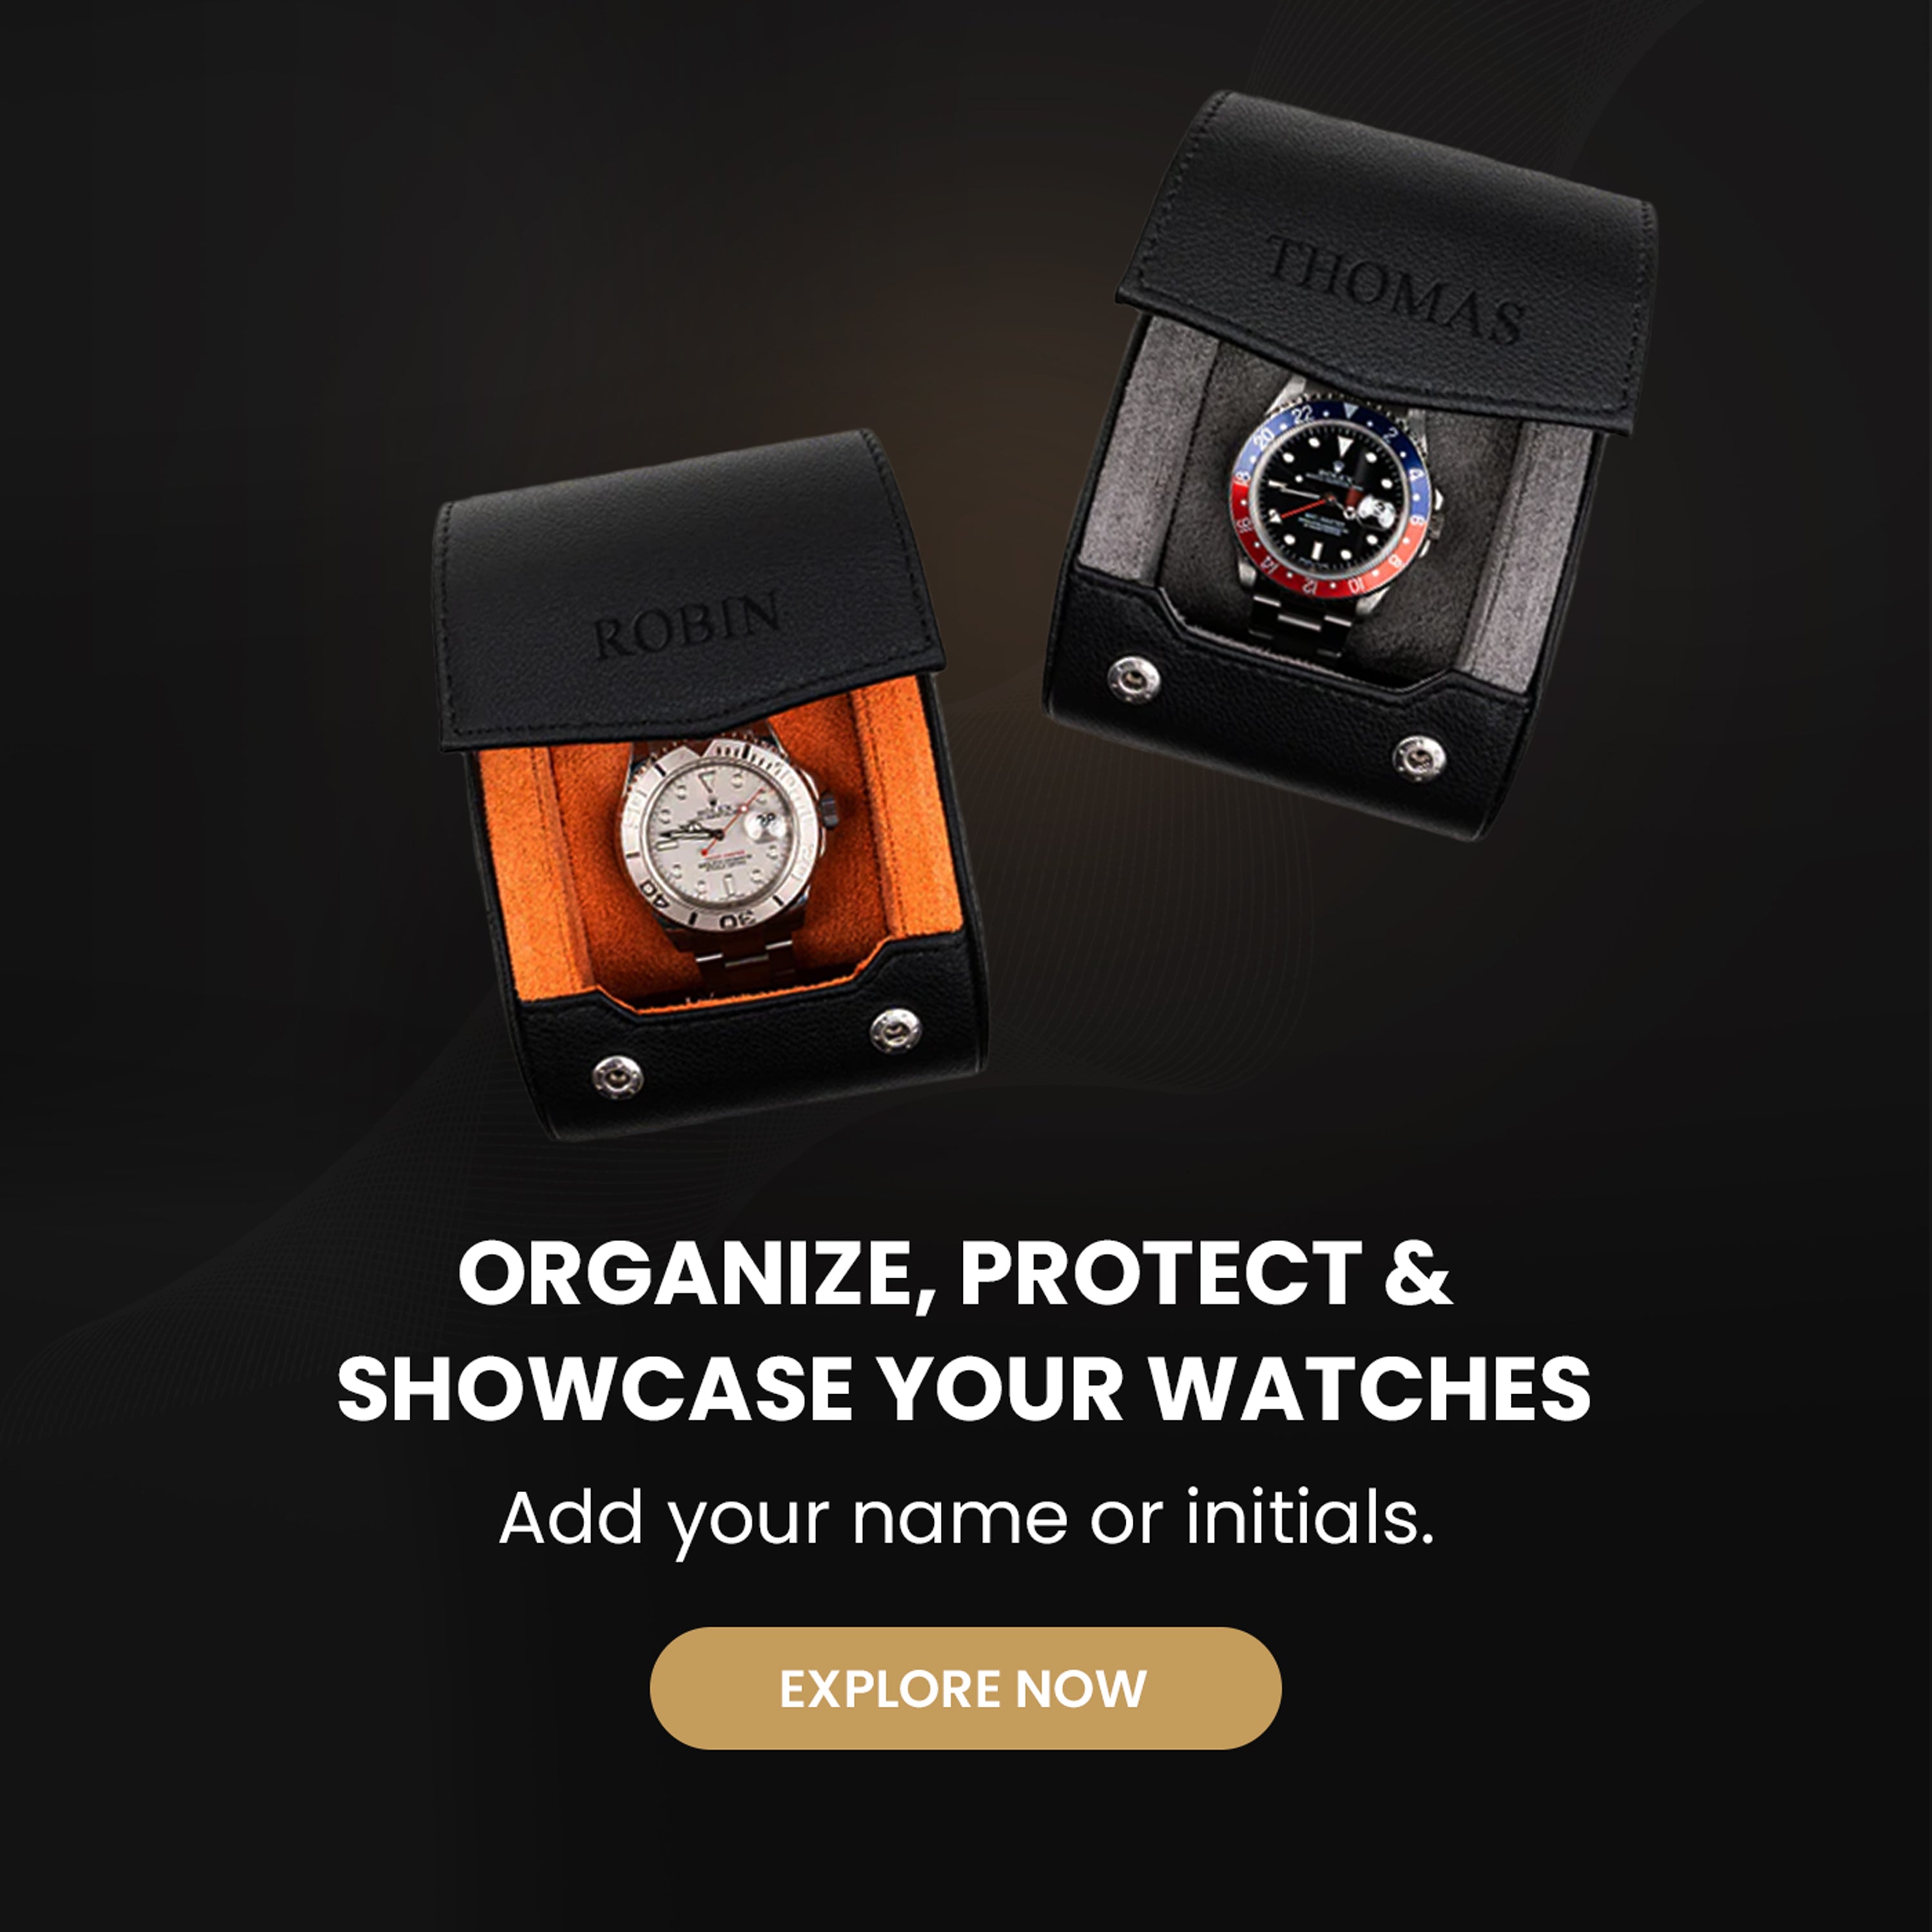 Watch Storage Case Gift Personalized Watch Box Custom Watch -  Denmark